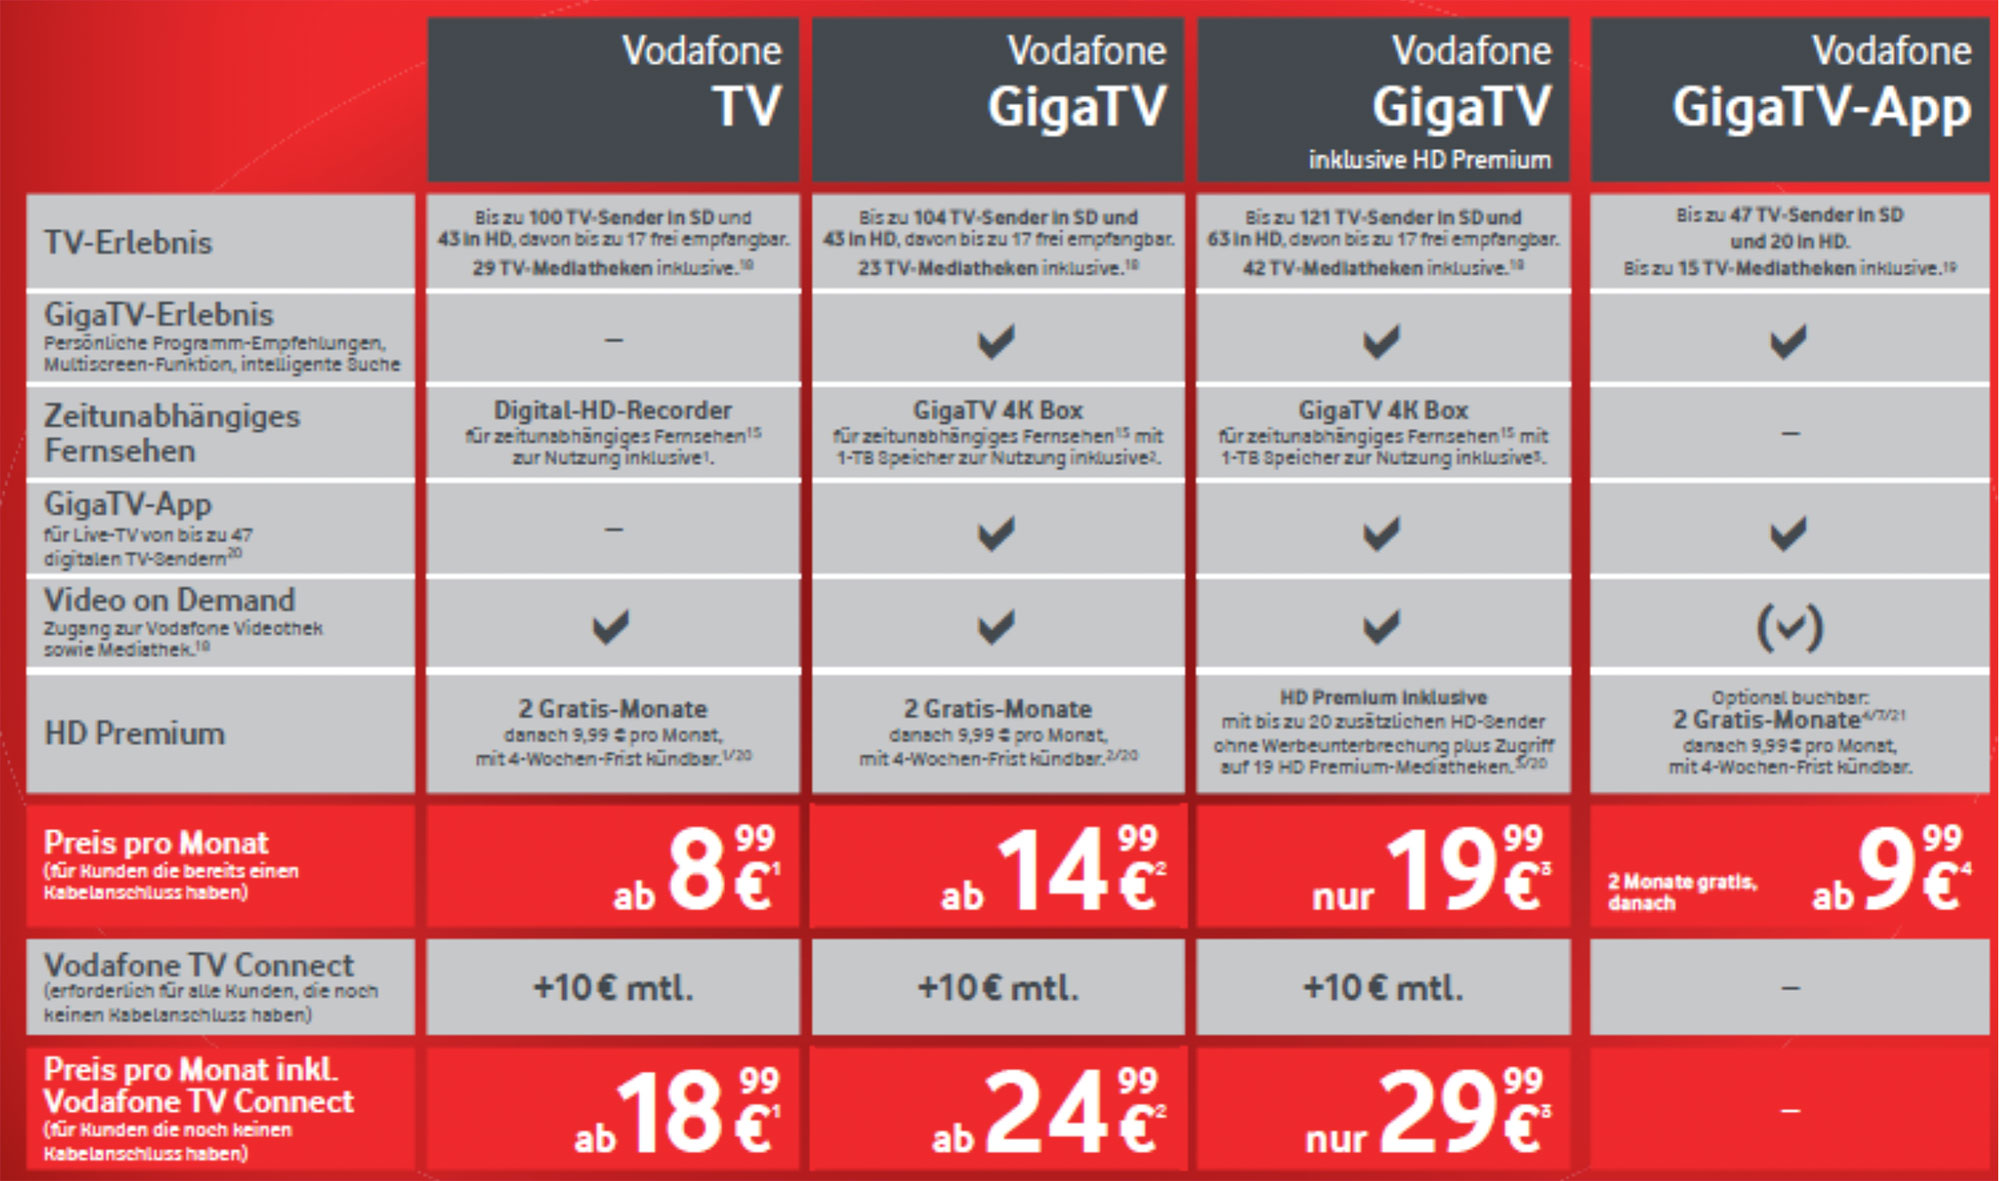 Vodafone Giga Tv App